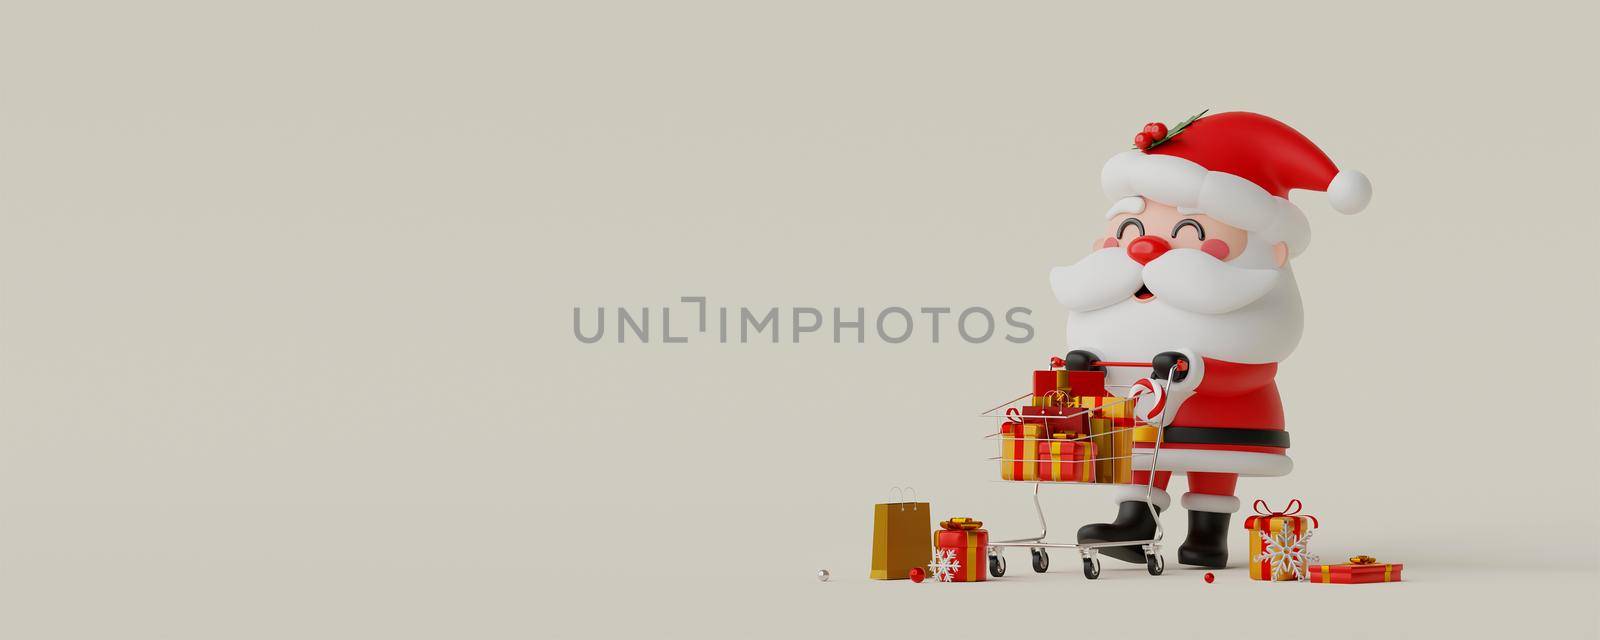 Santa Claus pushing shopping cart with Christmas gift box, 3d illustration by nutzchotwarut